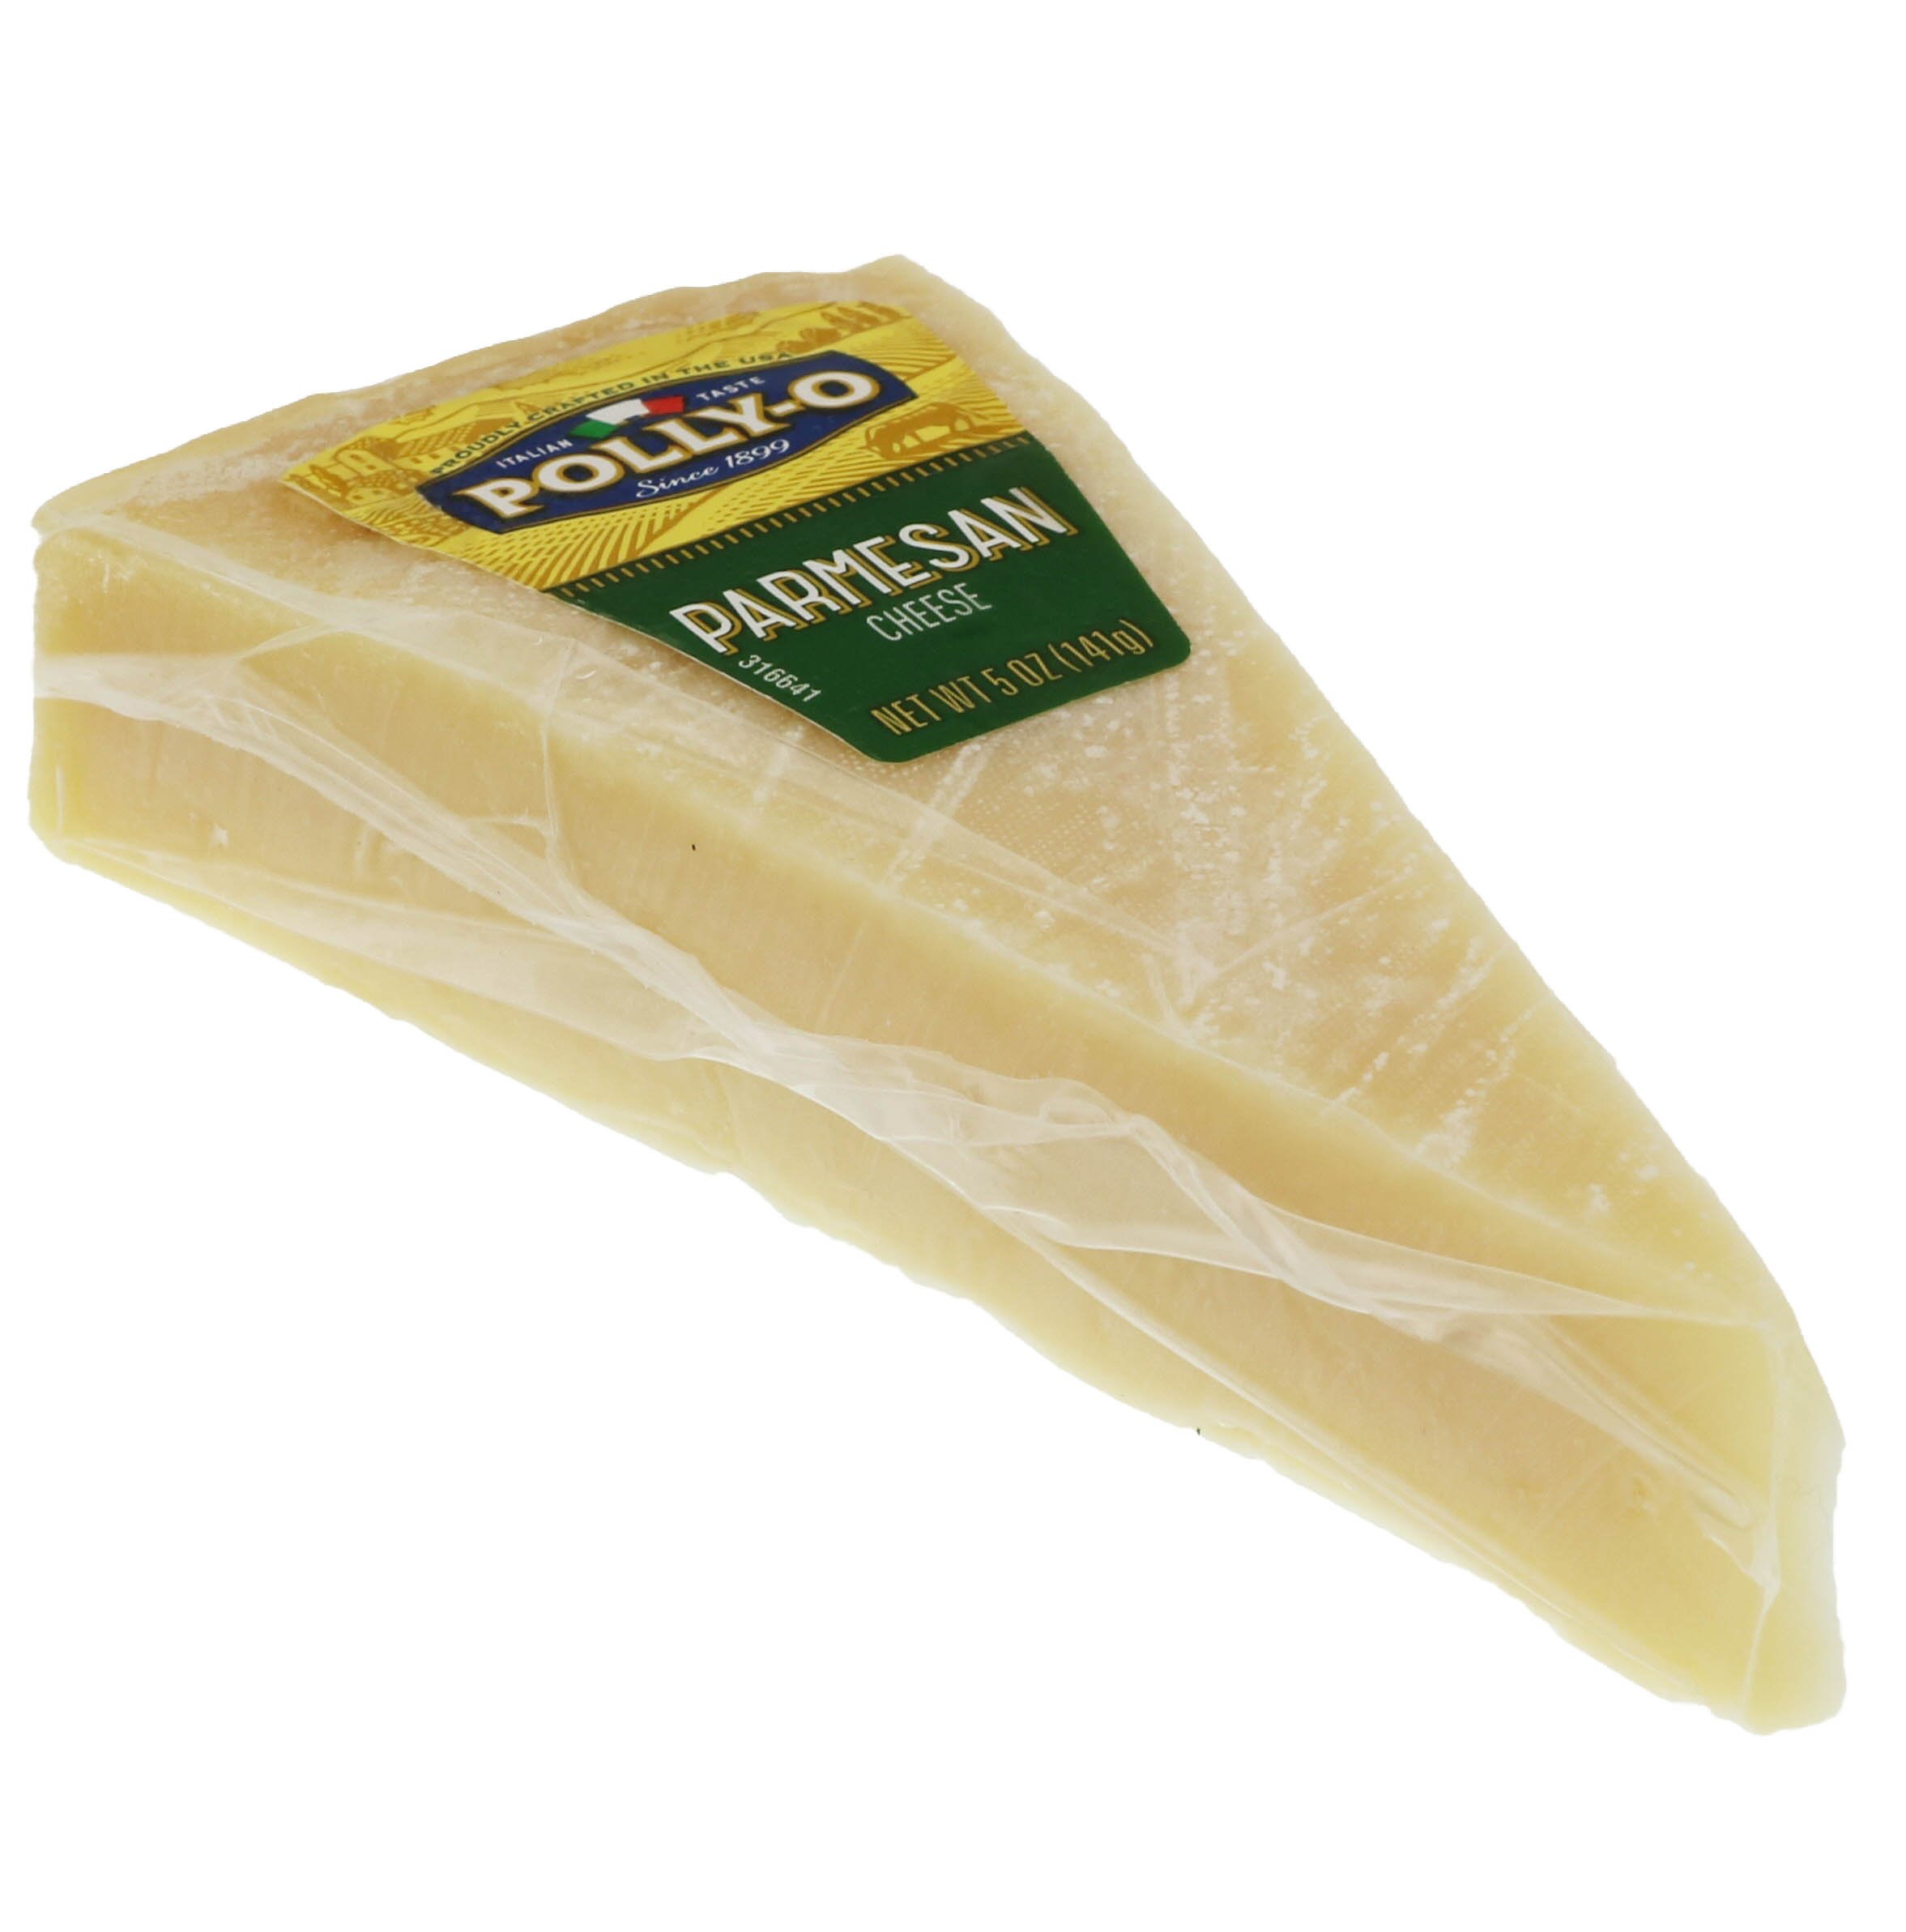 Polly O Parmesan Cheese Wedge Shop Cheese At H E B,Artichoke Plant